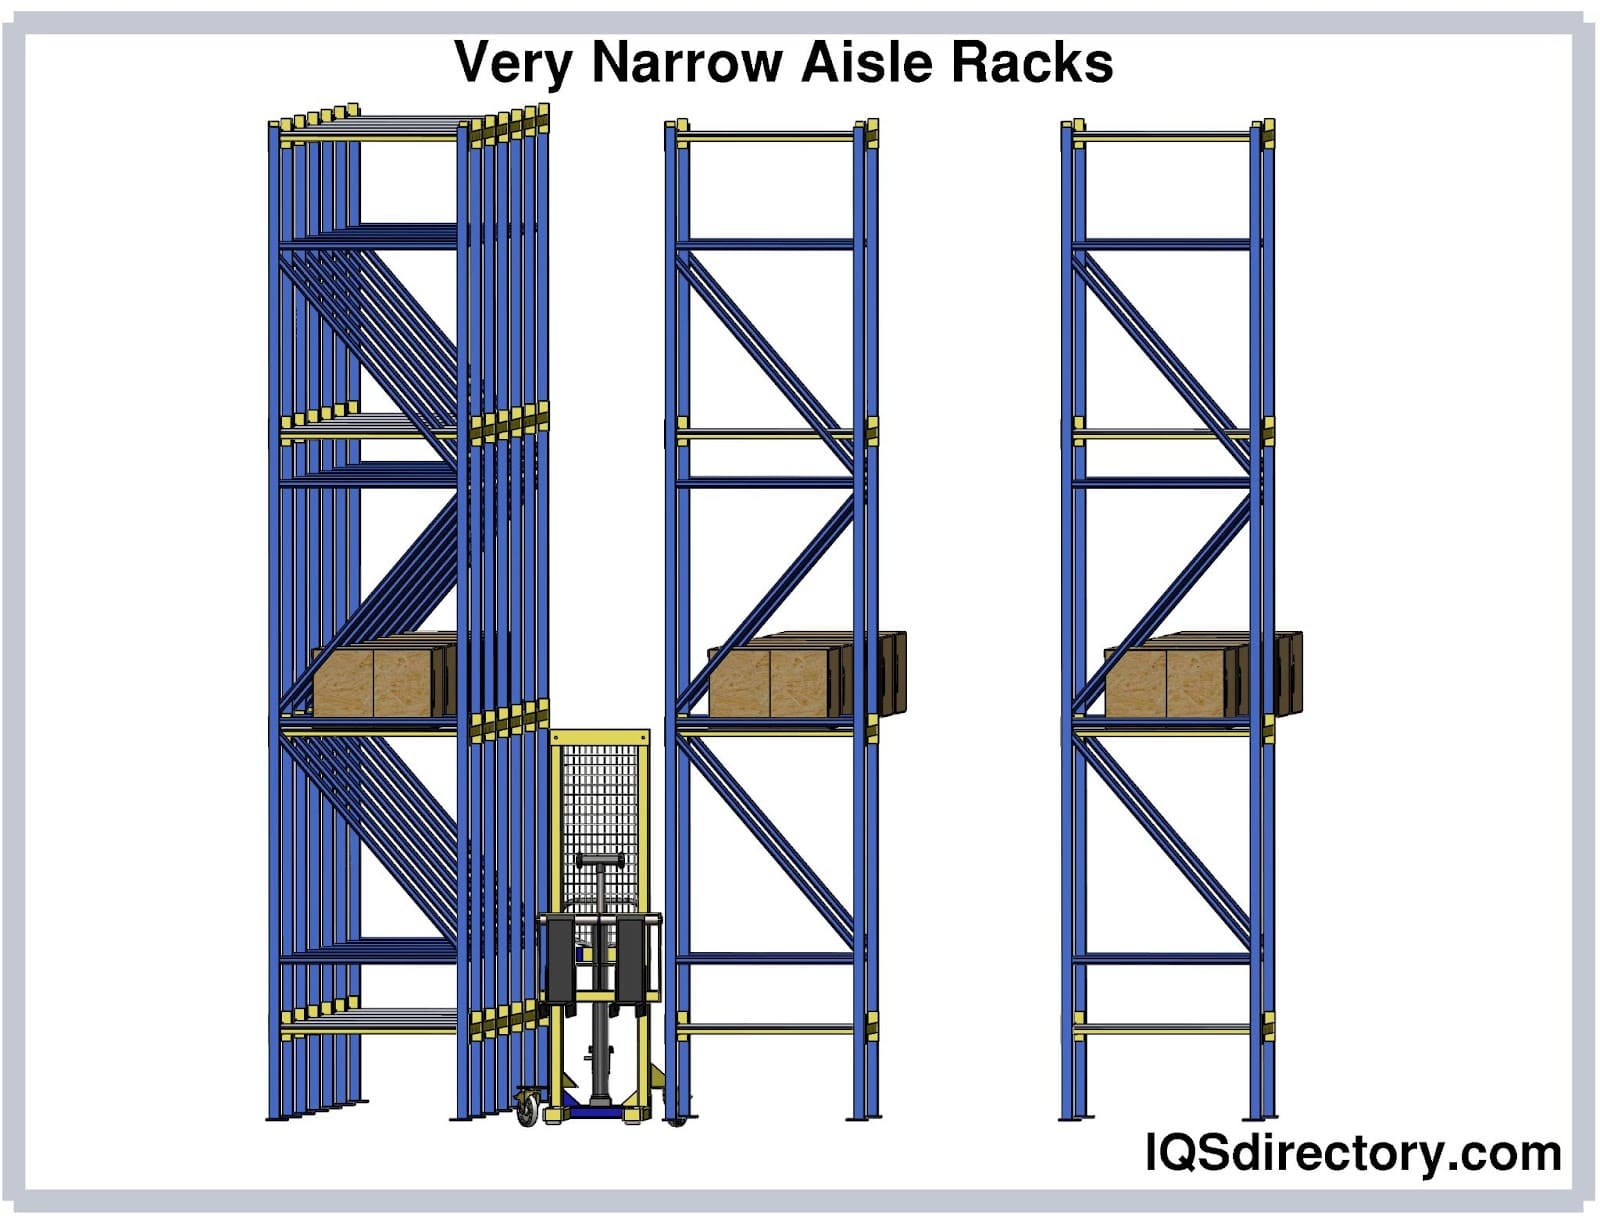 Very Narrow Aisle Racks